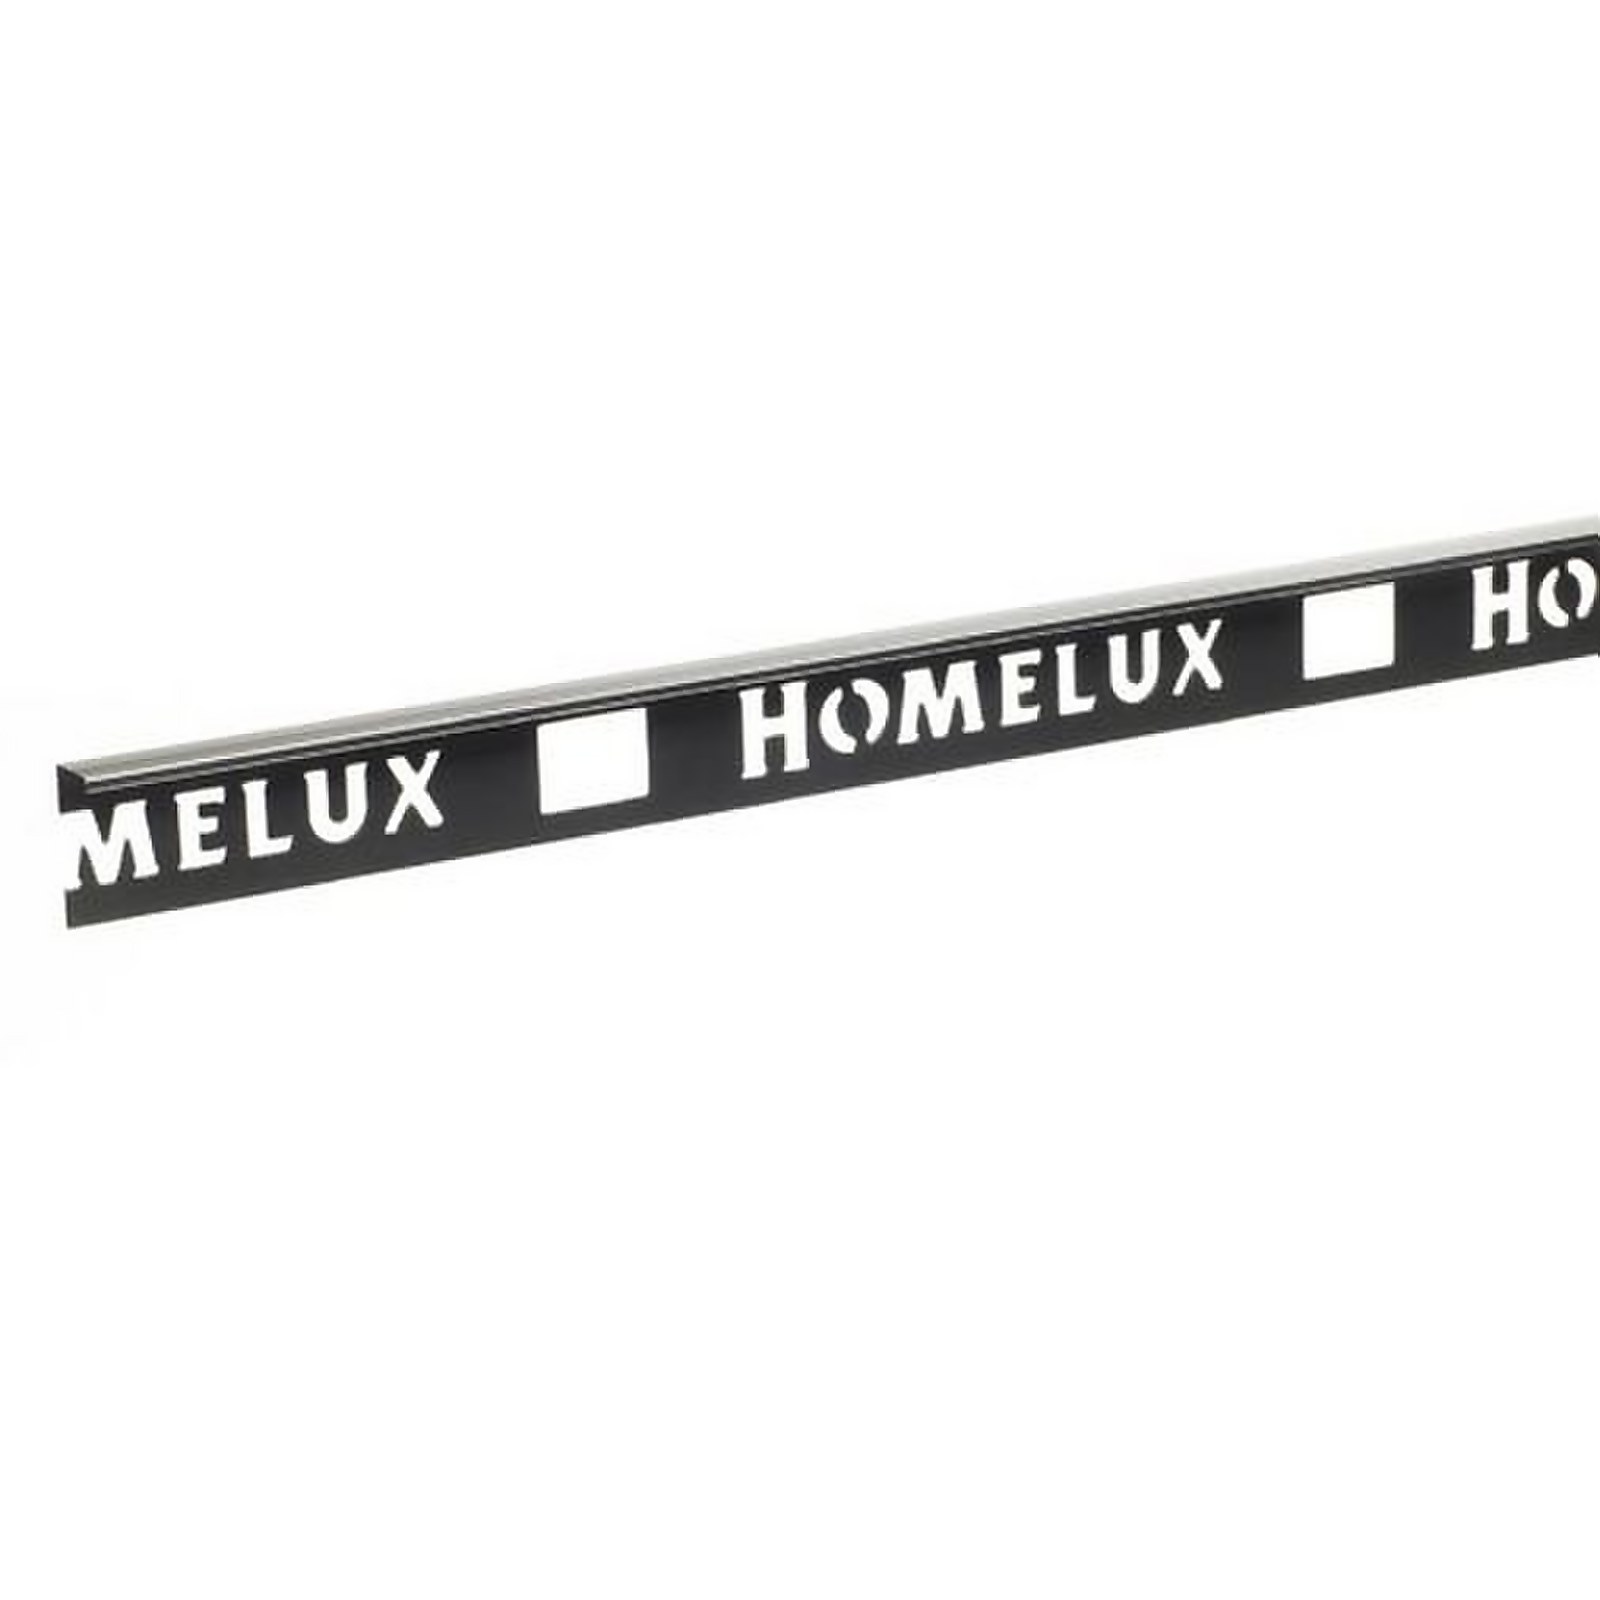 Photo of Homelux 8mm Straight Edge Tile Trim - Gun Metal Grey - 1.83m